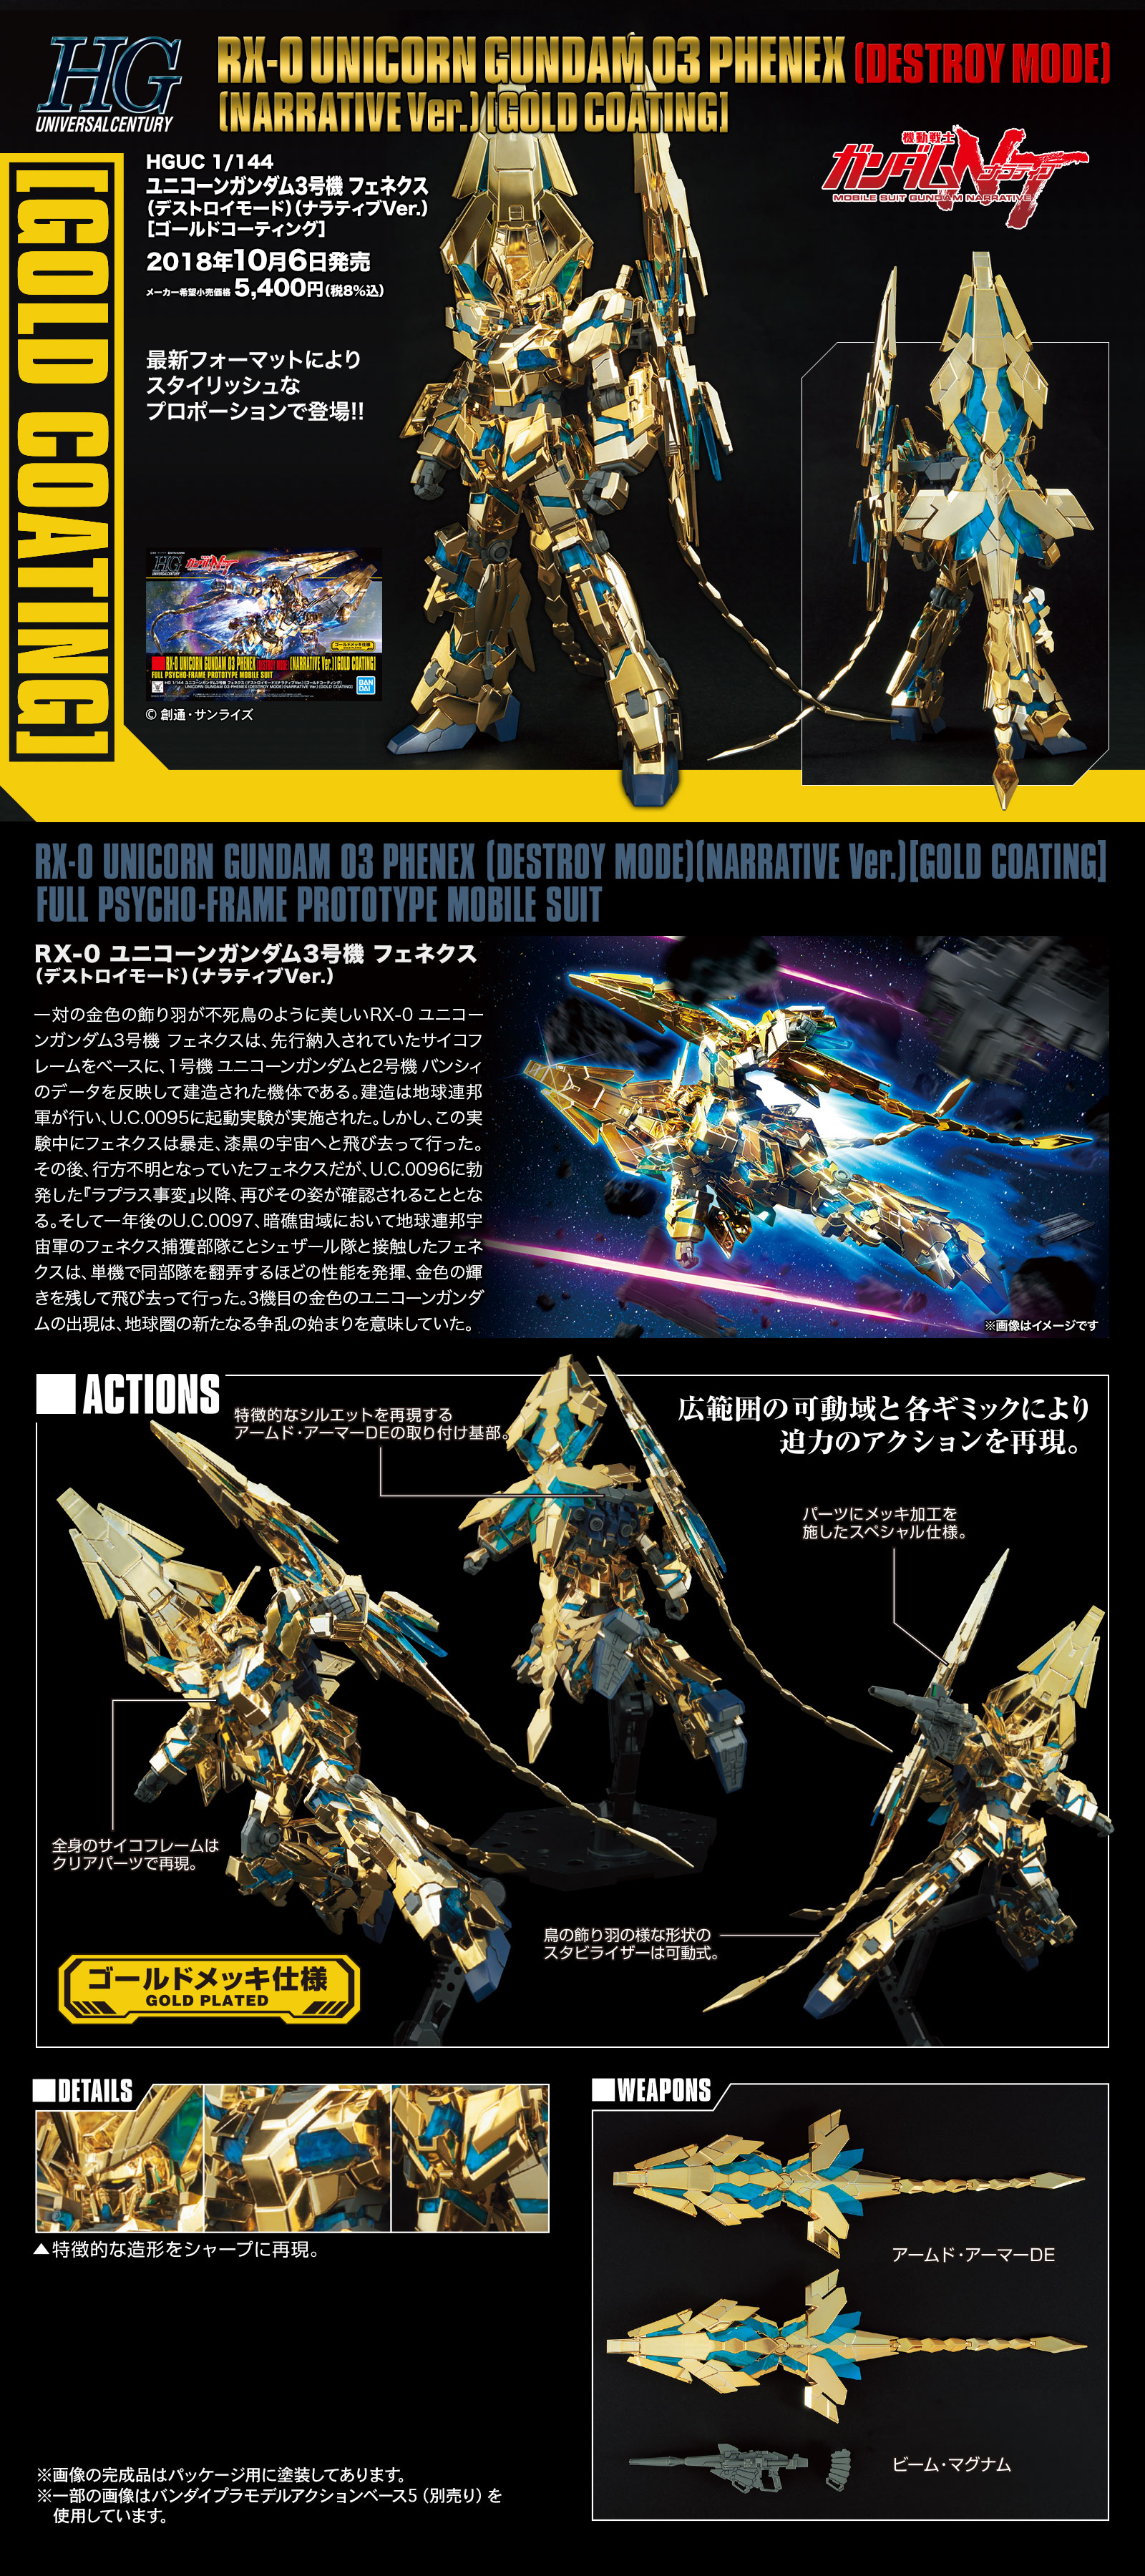 HGUC 1/144 No.216 RX-0 Unicorn Gundam 03 Phenex[Destory Mode](Narrative Gold Coating Ver.)